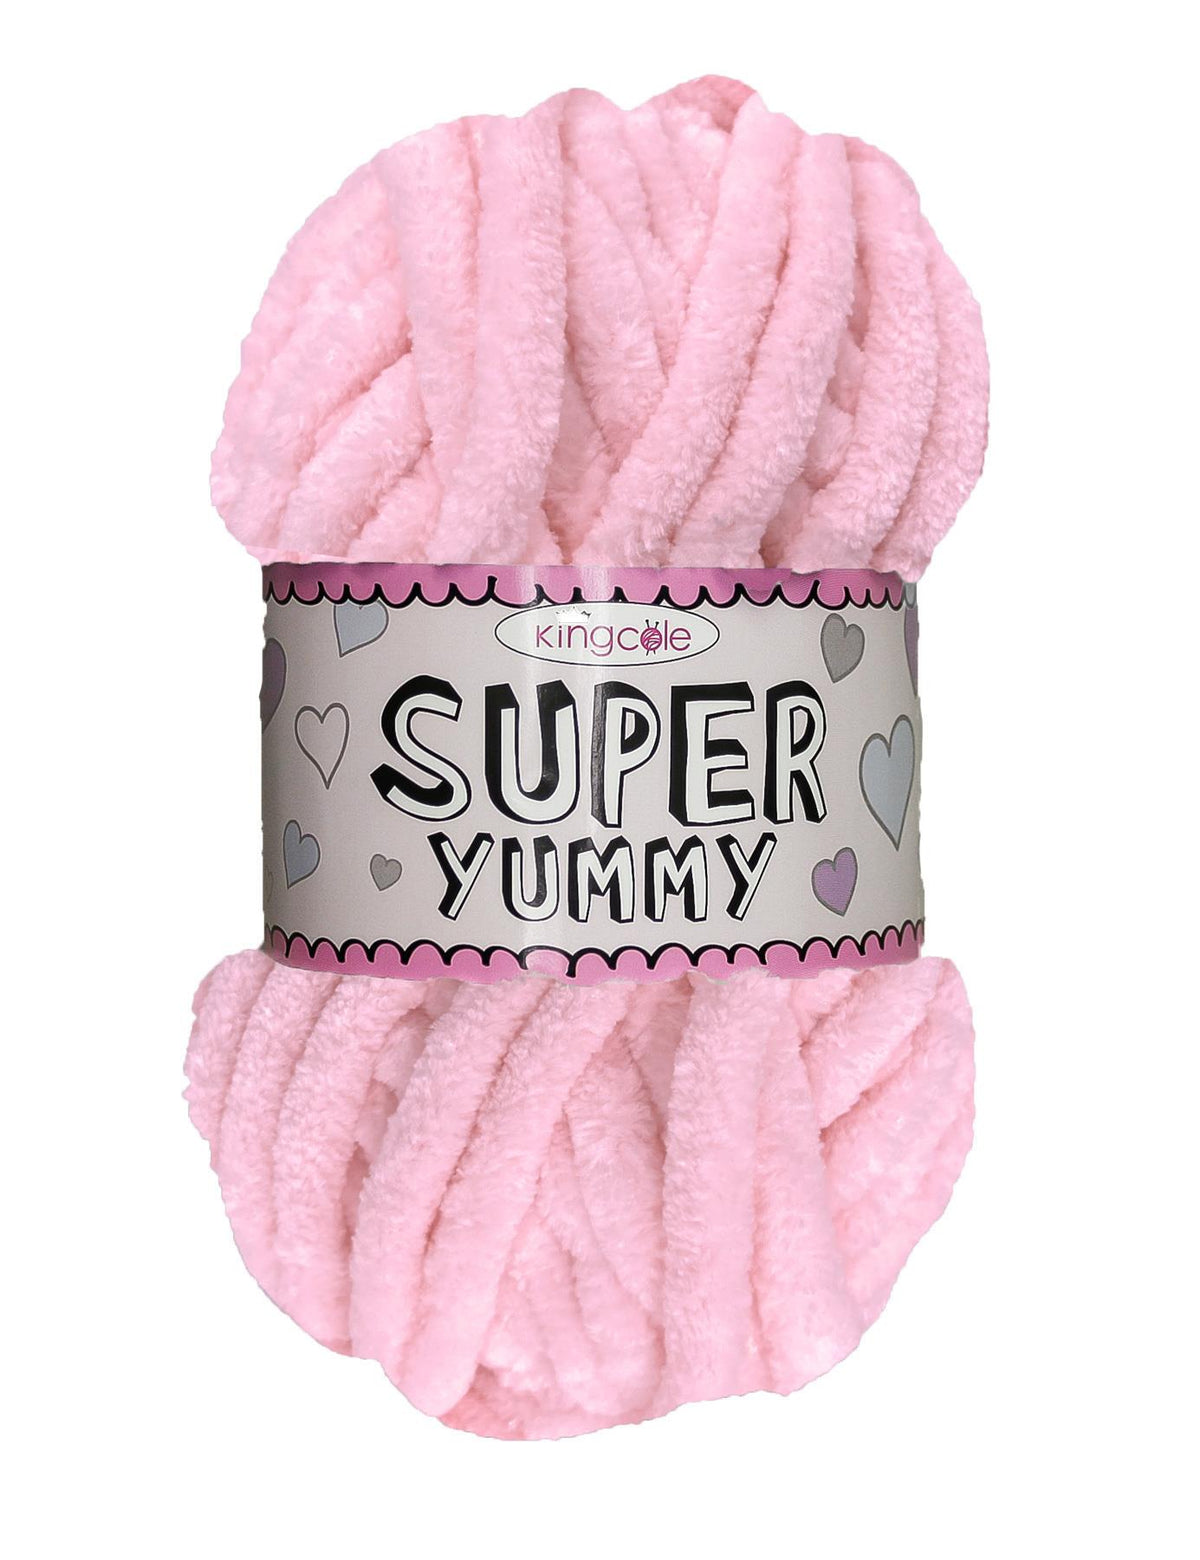 King Cole Super Yummy Baby Pink (4875) chenille yarn - 100g